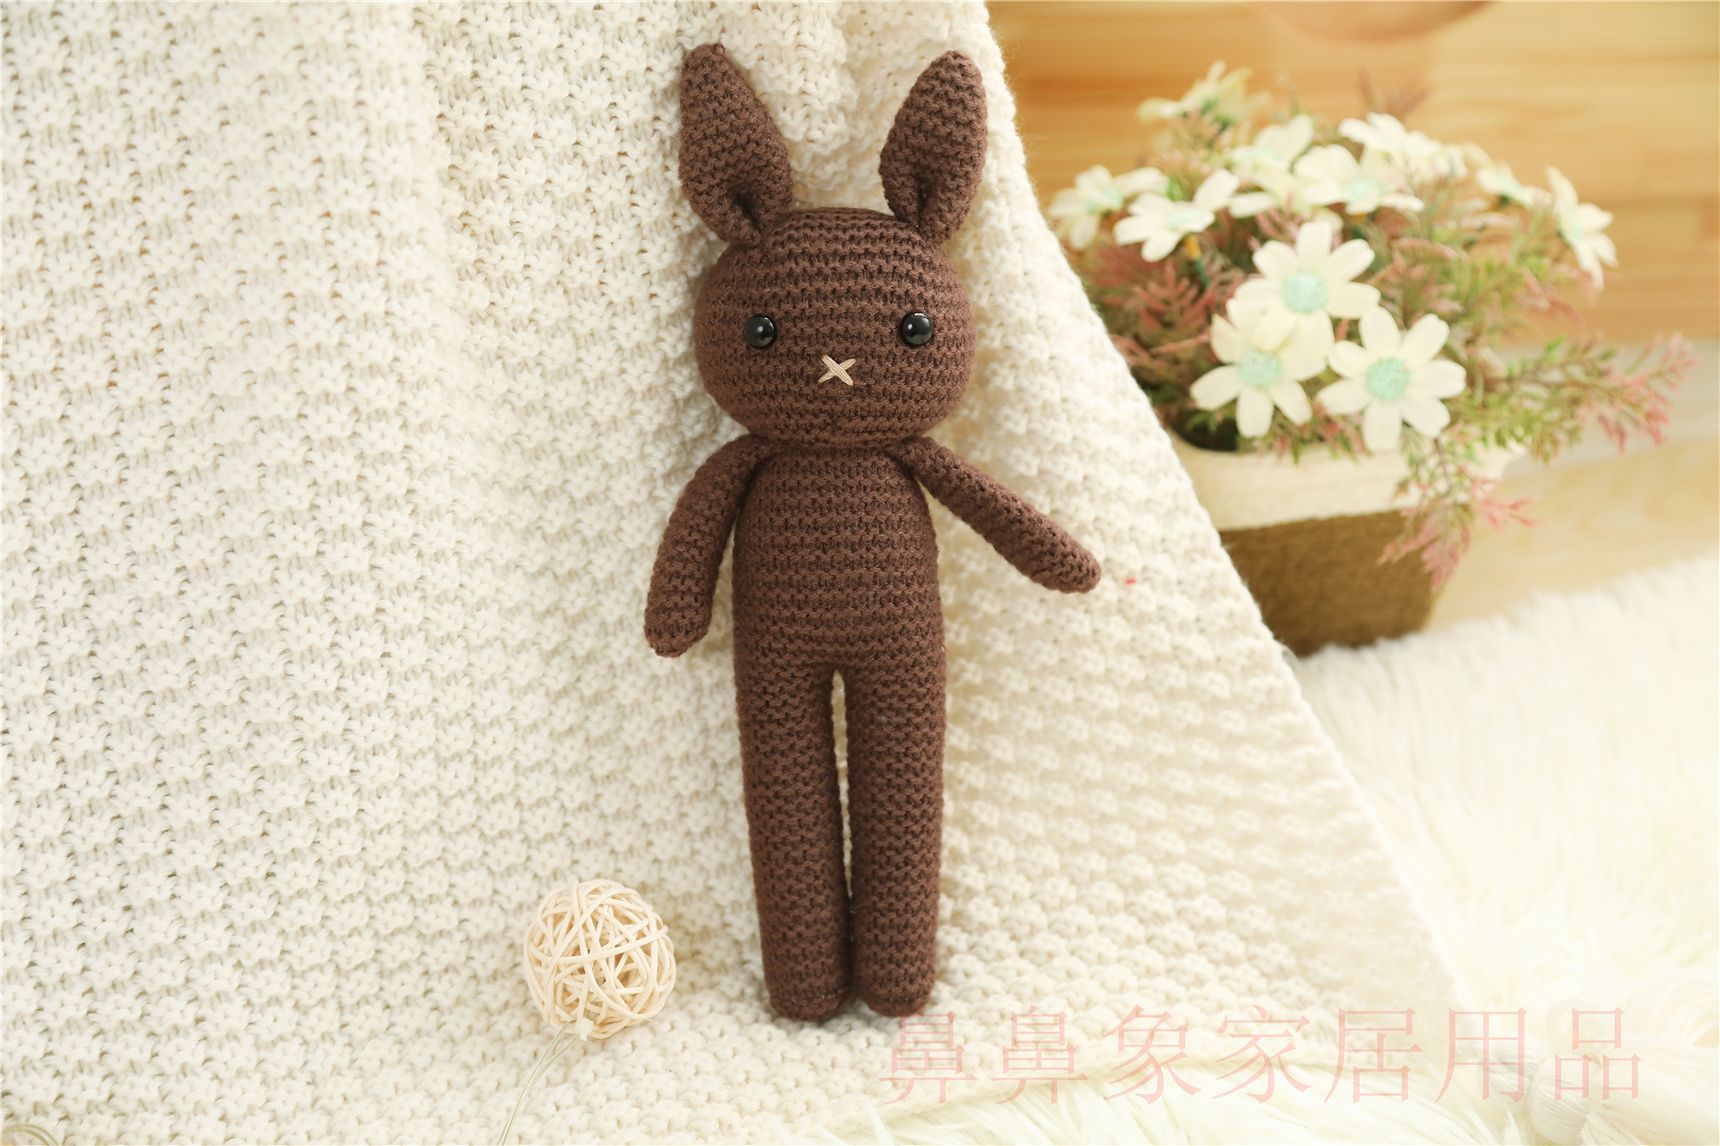 New Handmade Rabbit Crochet Wool Doll Animal Stuffed Plush Toy Baby Soothing Baby Sleeping Plush Toy Gifts For Kids Birthday